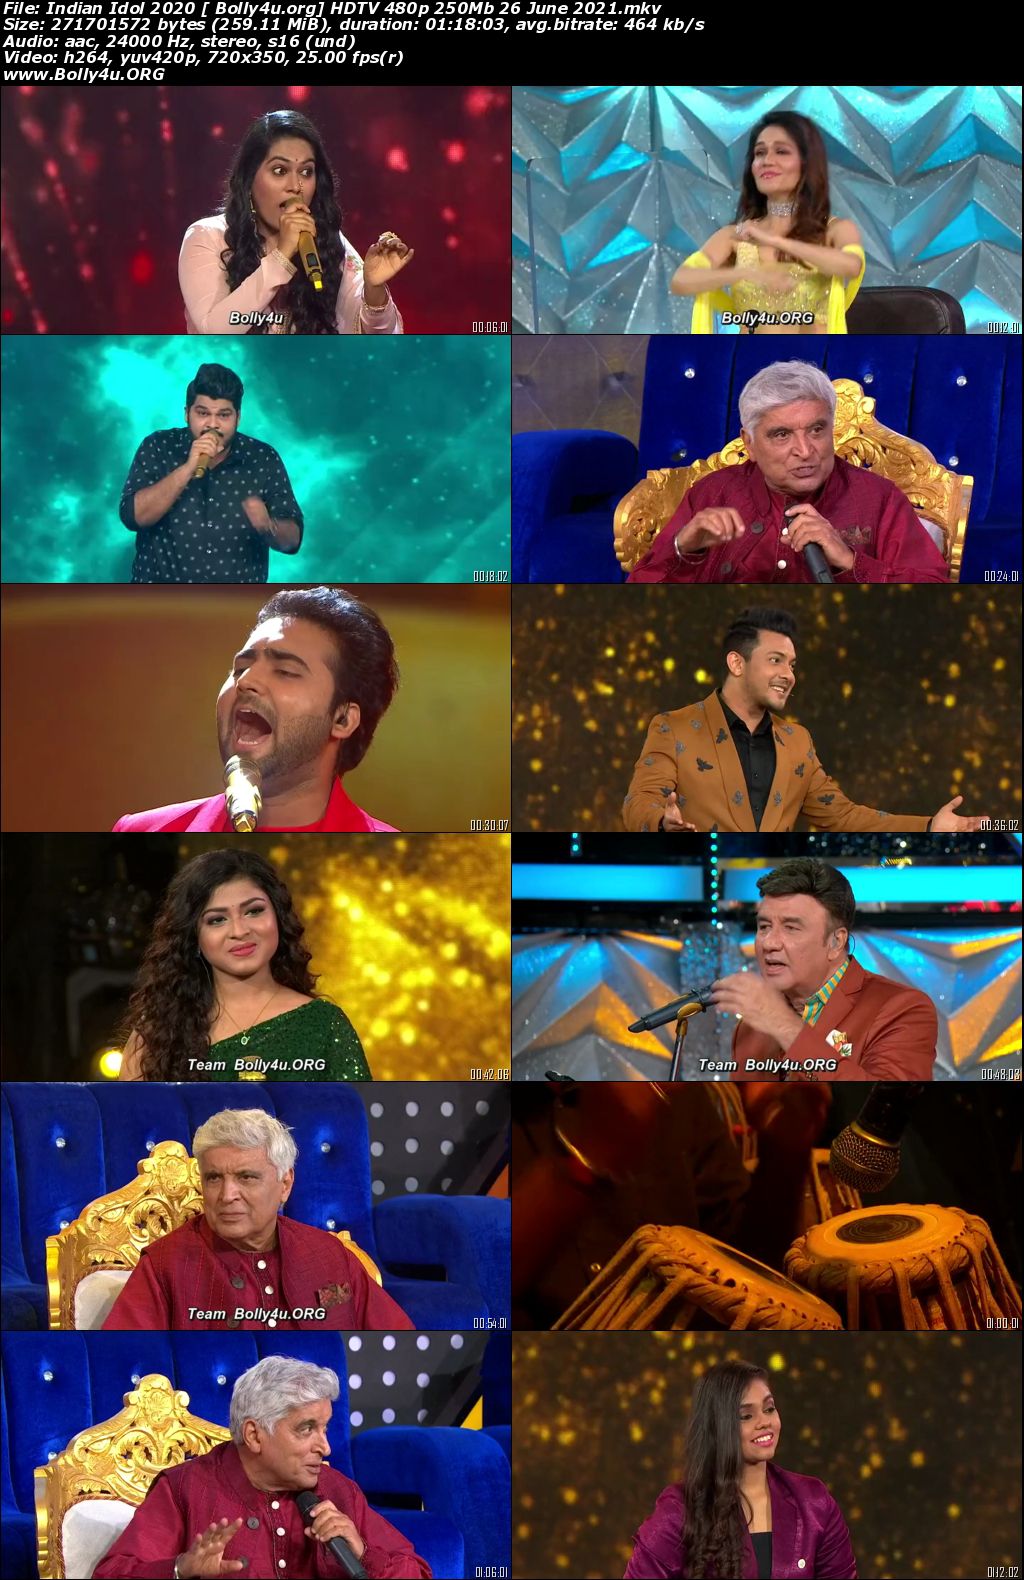 Indian Idol HDTV 480p 250Mb 26 June 2021 Download